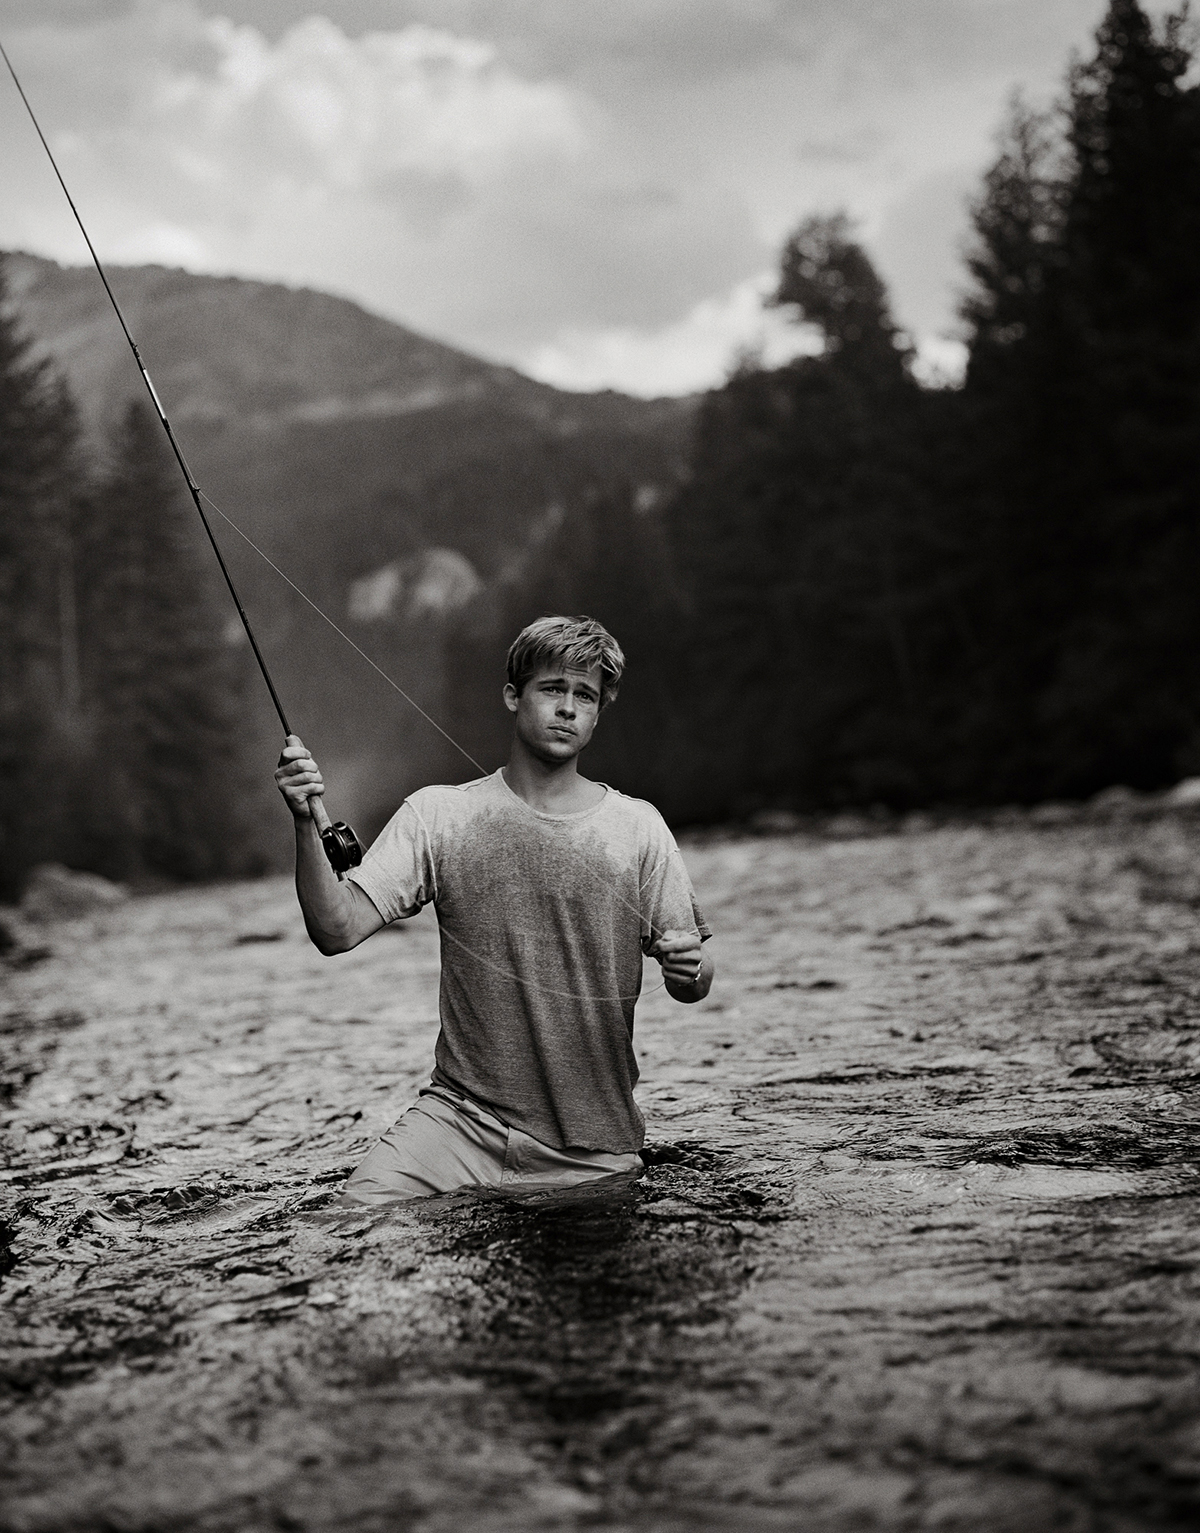 Brad Pitt fishing in a river